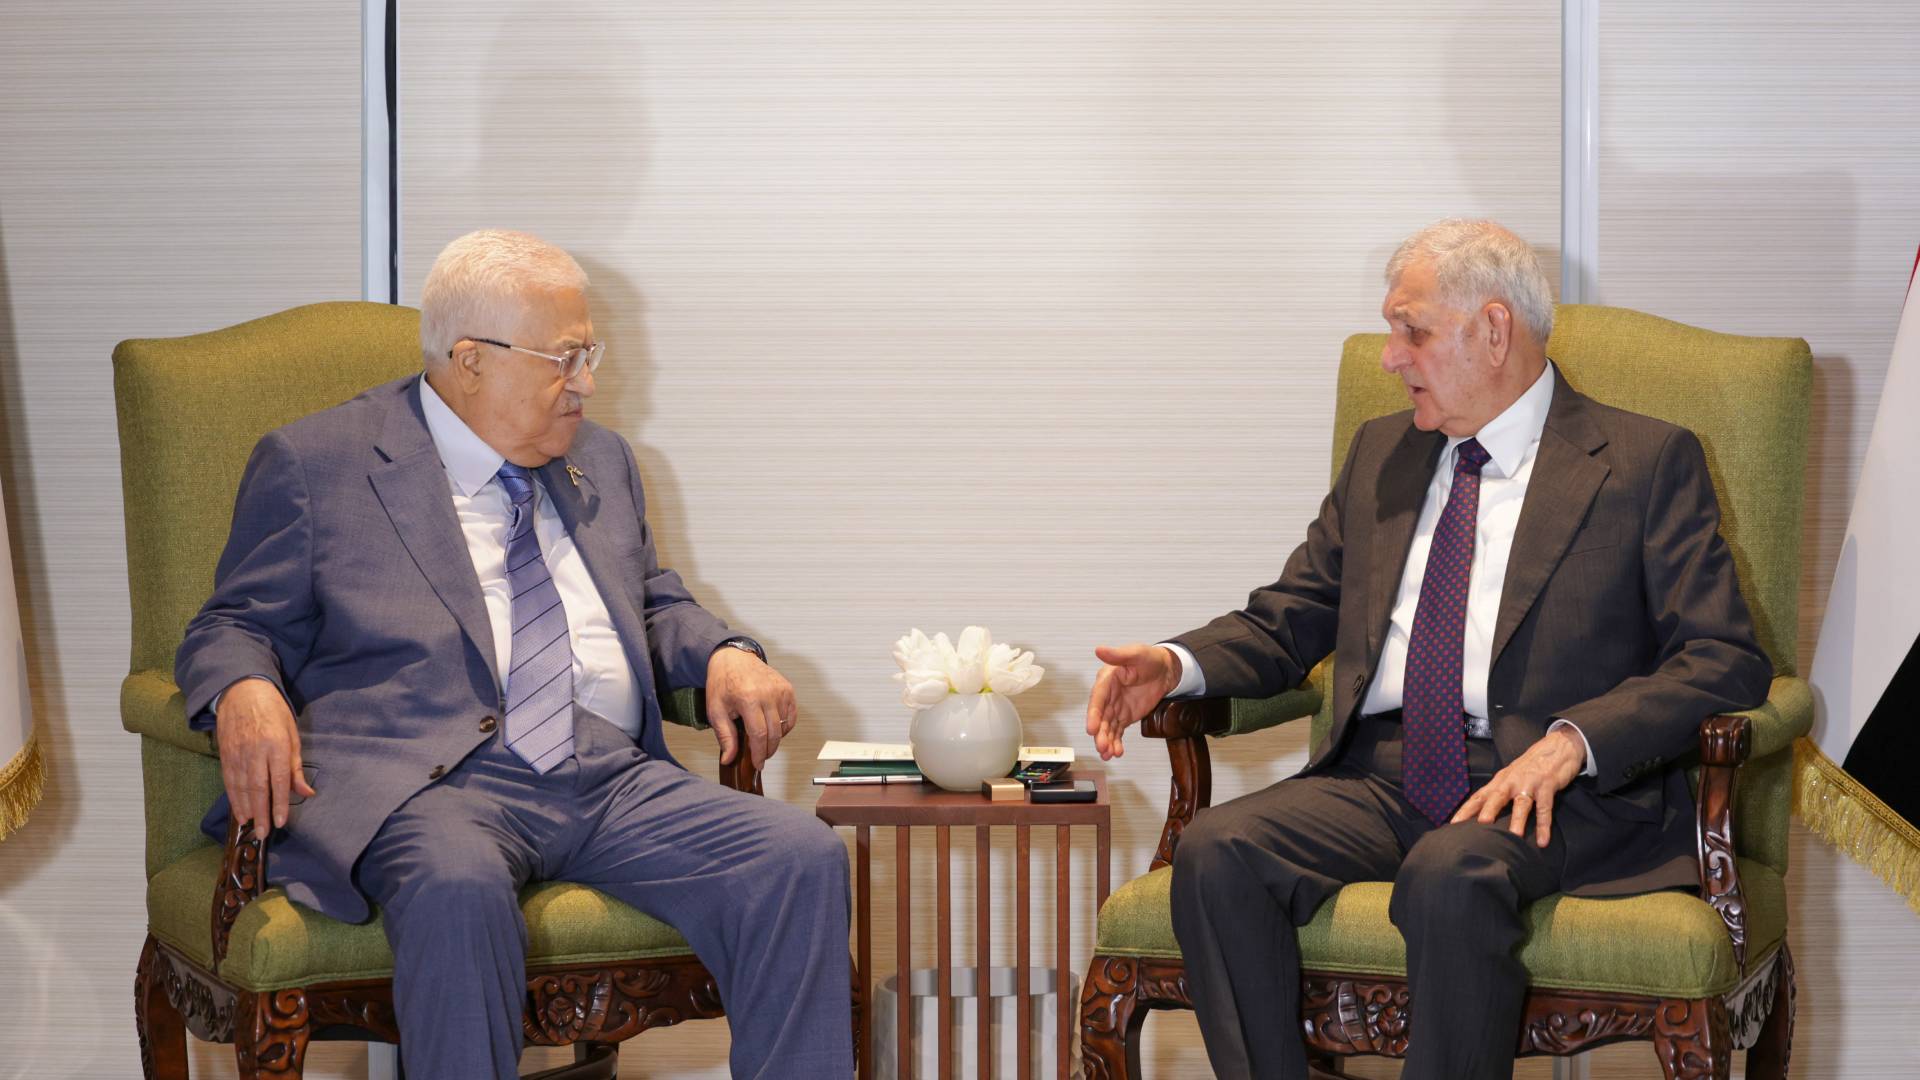 Presidents of Iraq & Palestine